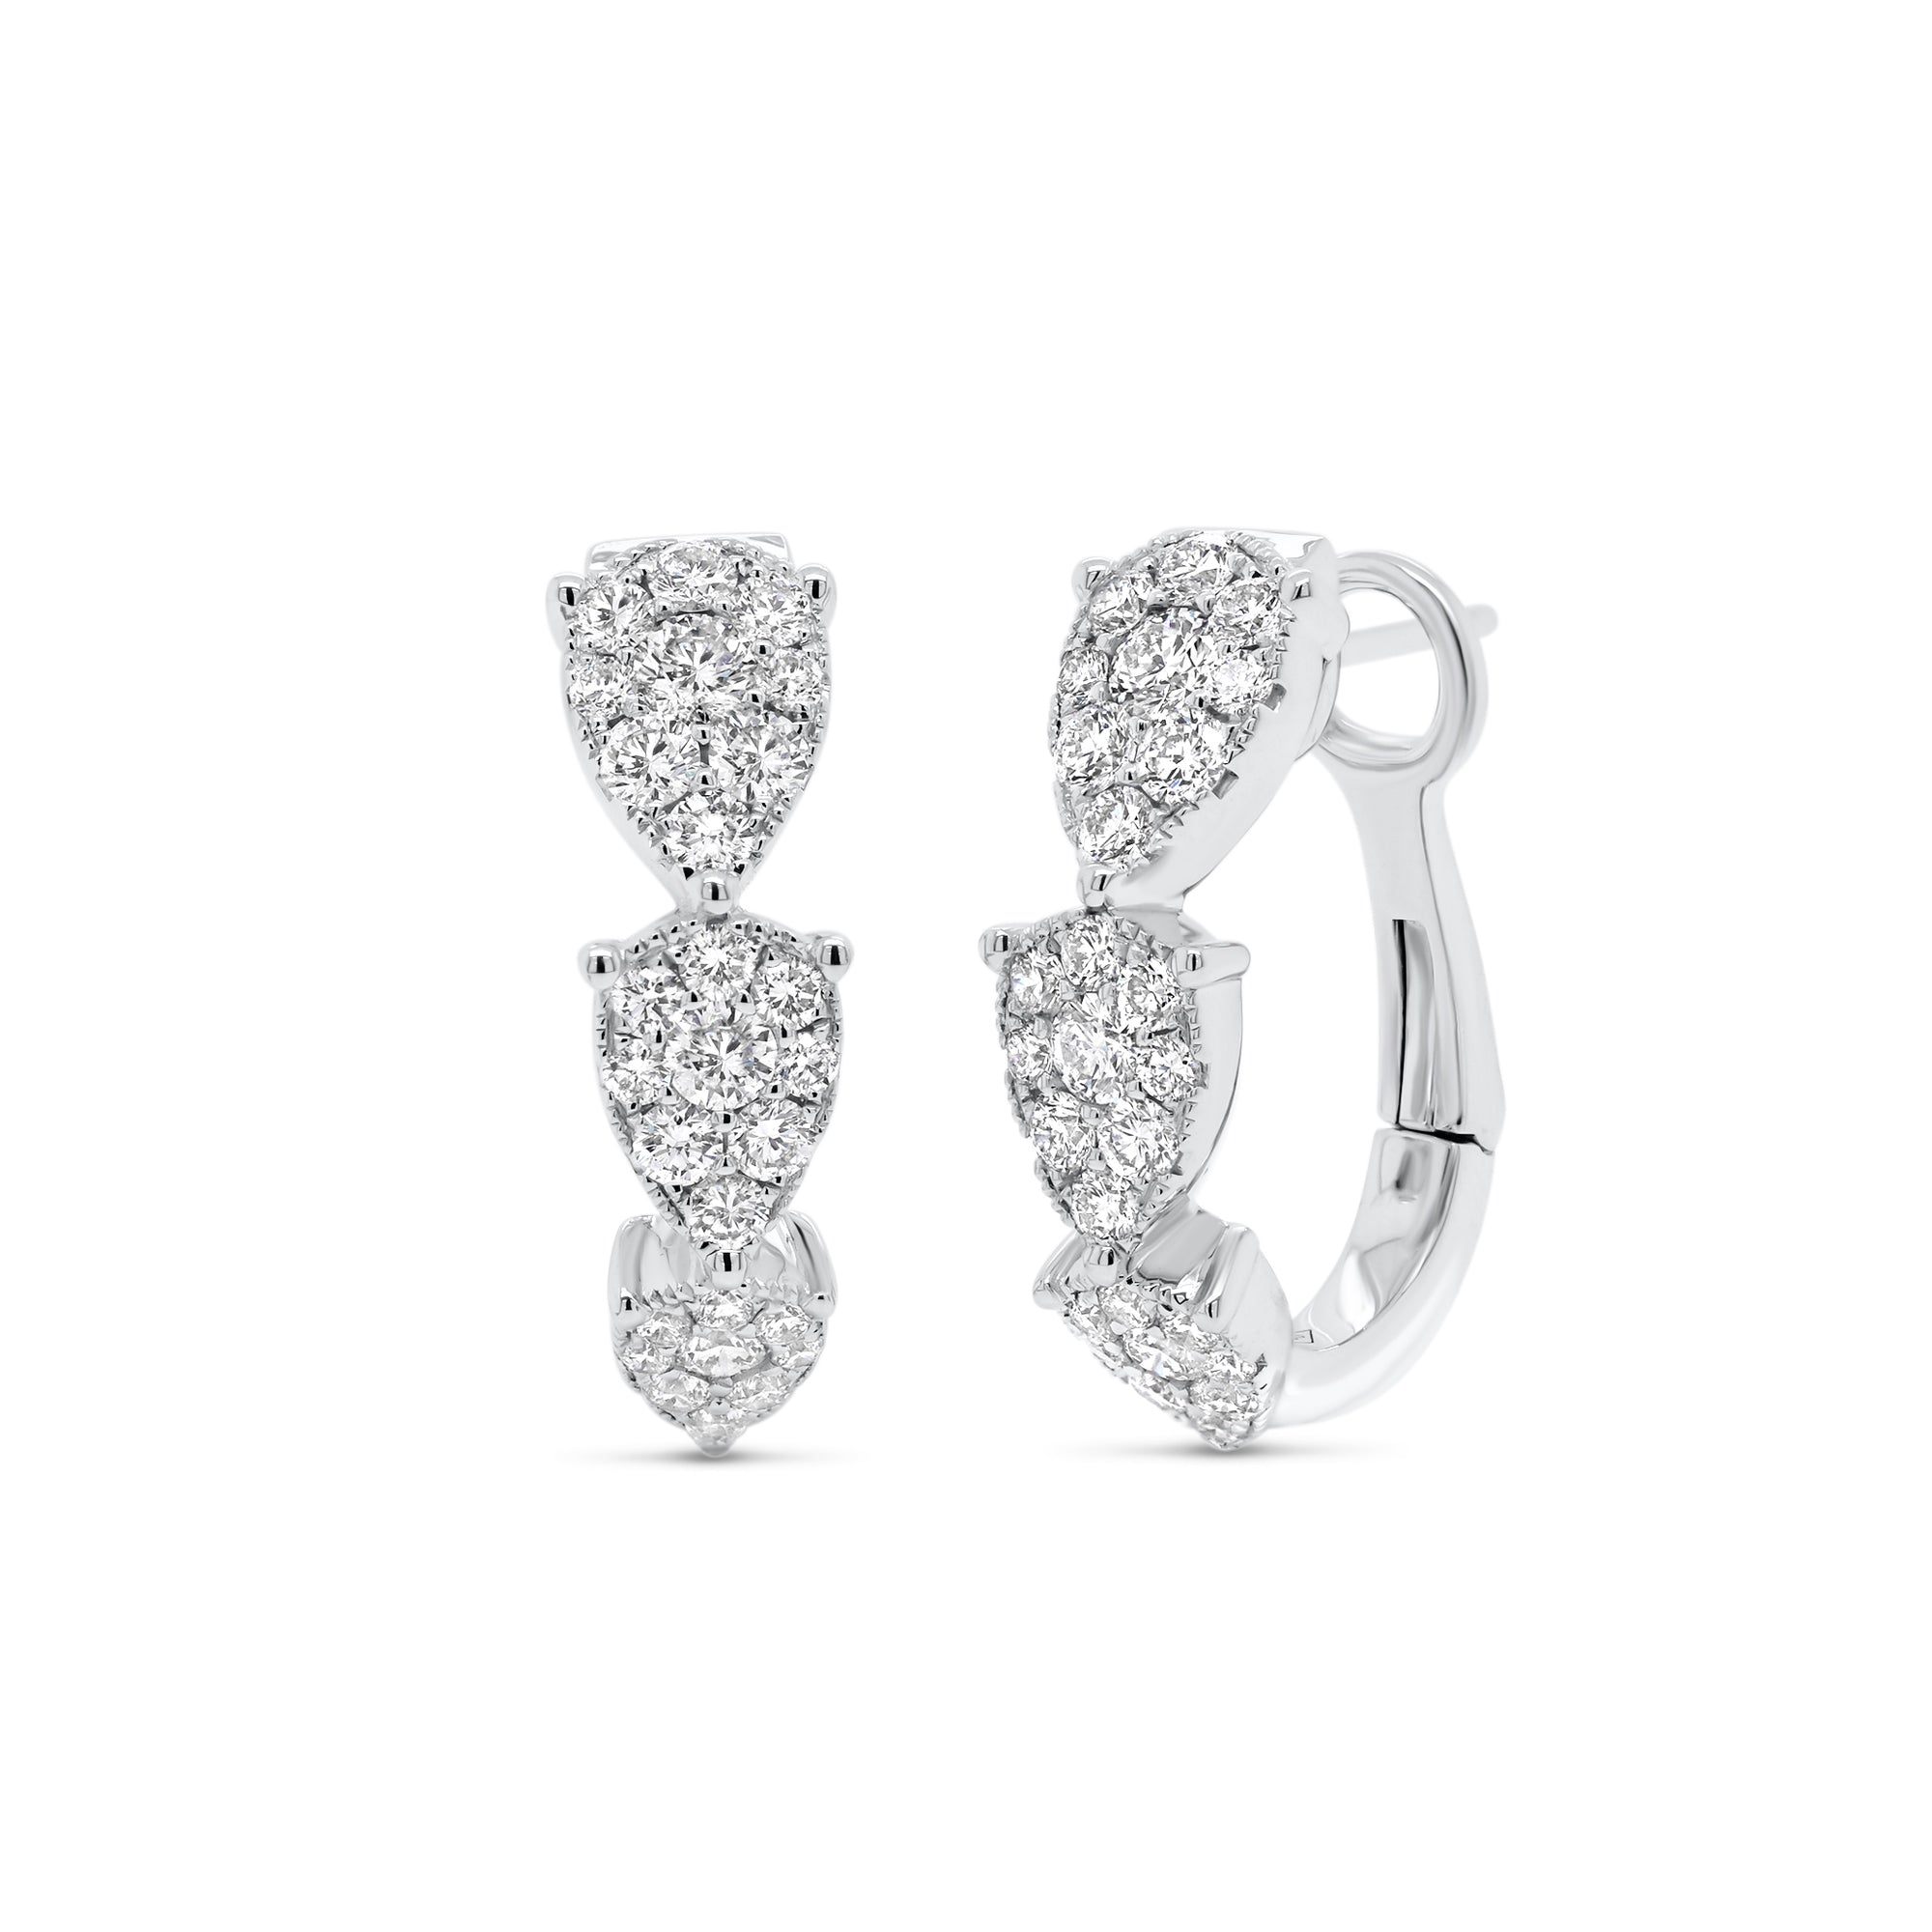 Diamond Teardrops Hoops Earrings - 18K gold weighing 6.47 grams  - 54 round diamonds totaling 1.22 carats